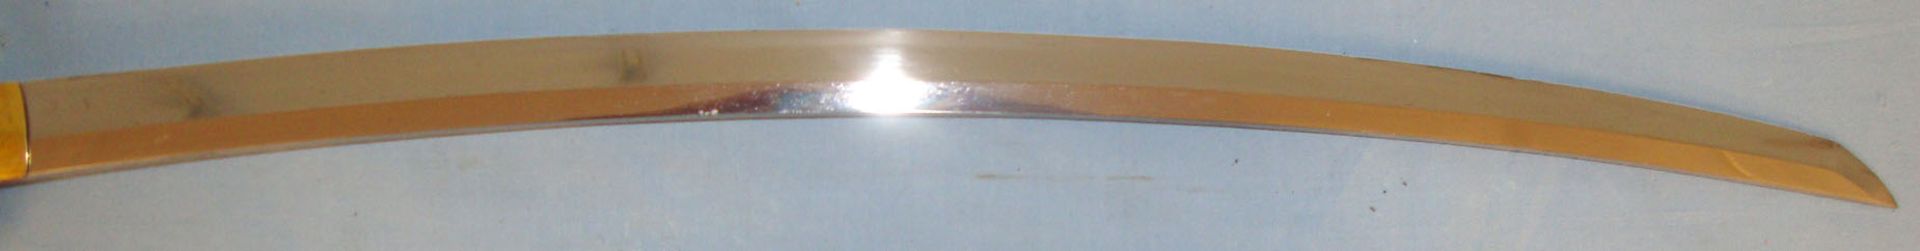 ANCIENT BLADE 1390-1393 2nd Generation Kanezane Sword Smith Japanese Blade Mint Polish (New Images) - Image 11 of 11